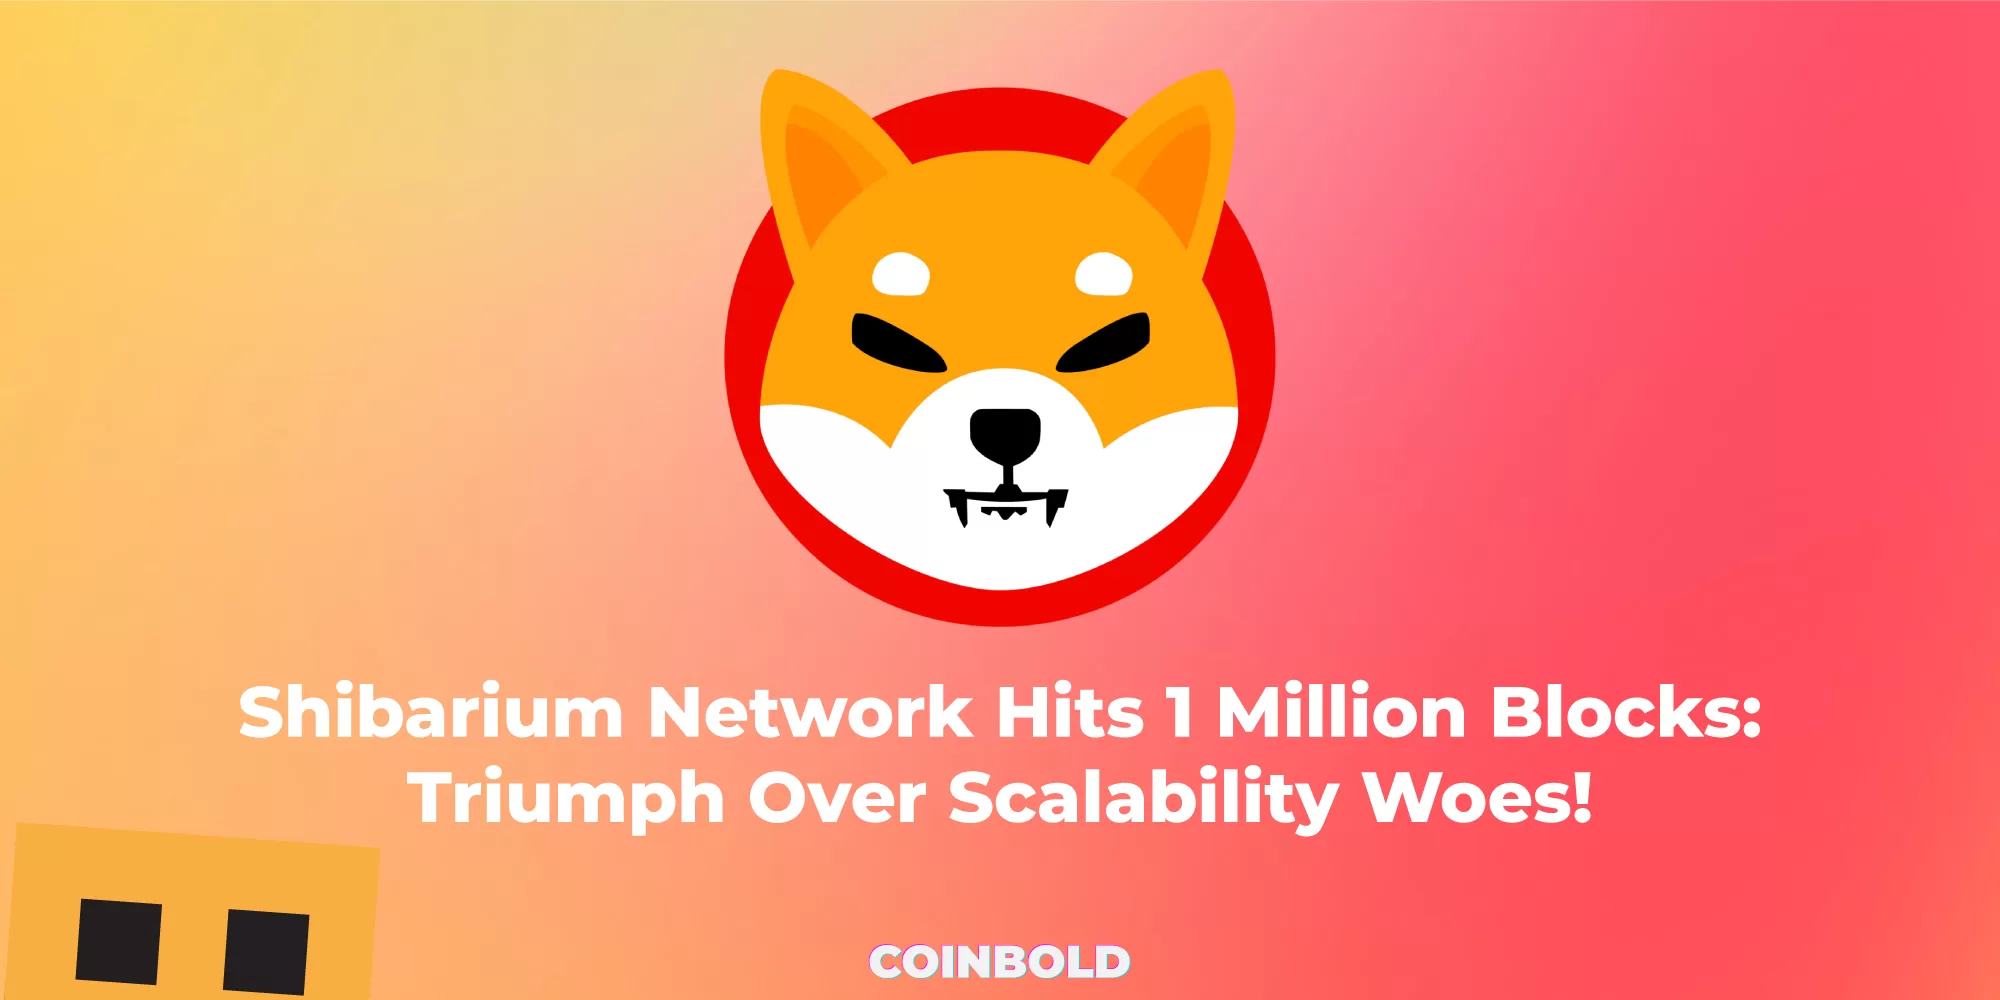 Shibarium Network Hits 1 Million Blocks Triumph Over Scalability Woes!